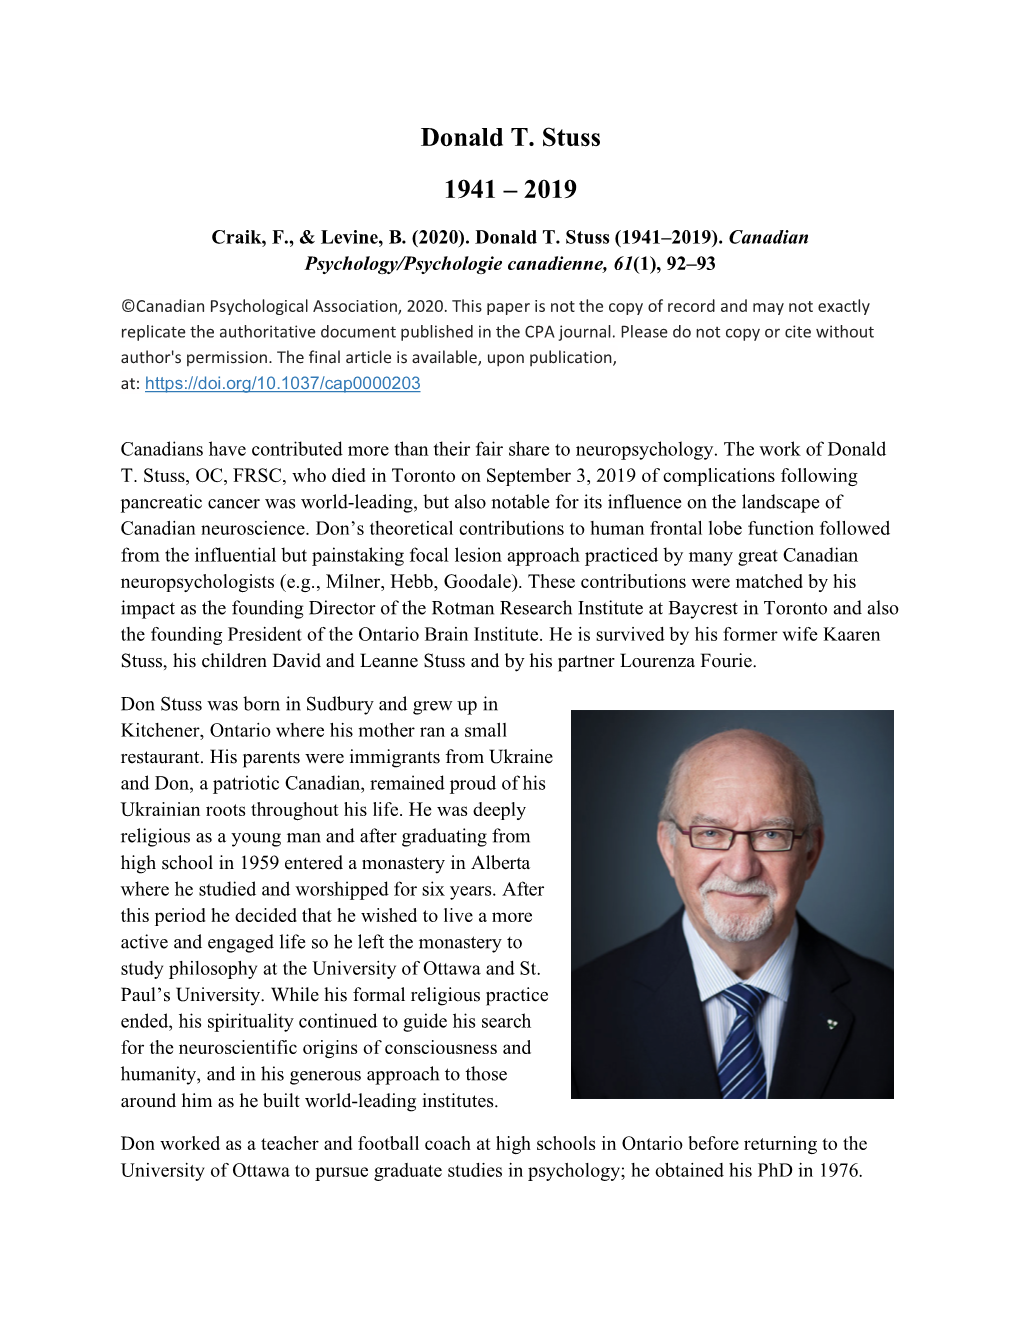 Don Stuss Obituary Canadian Psychology